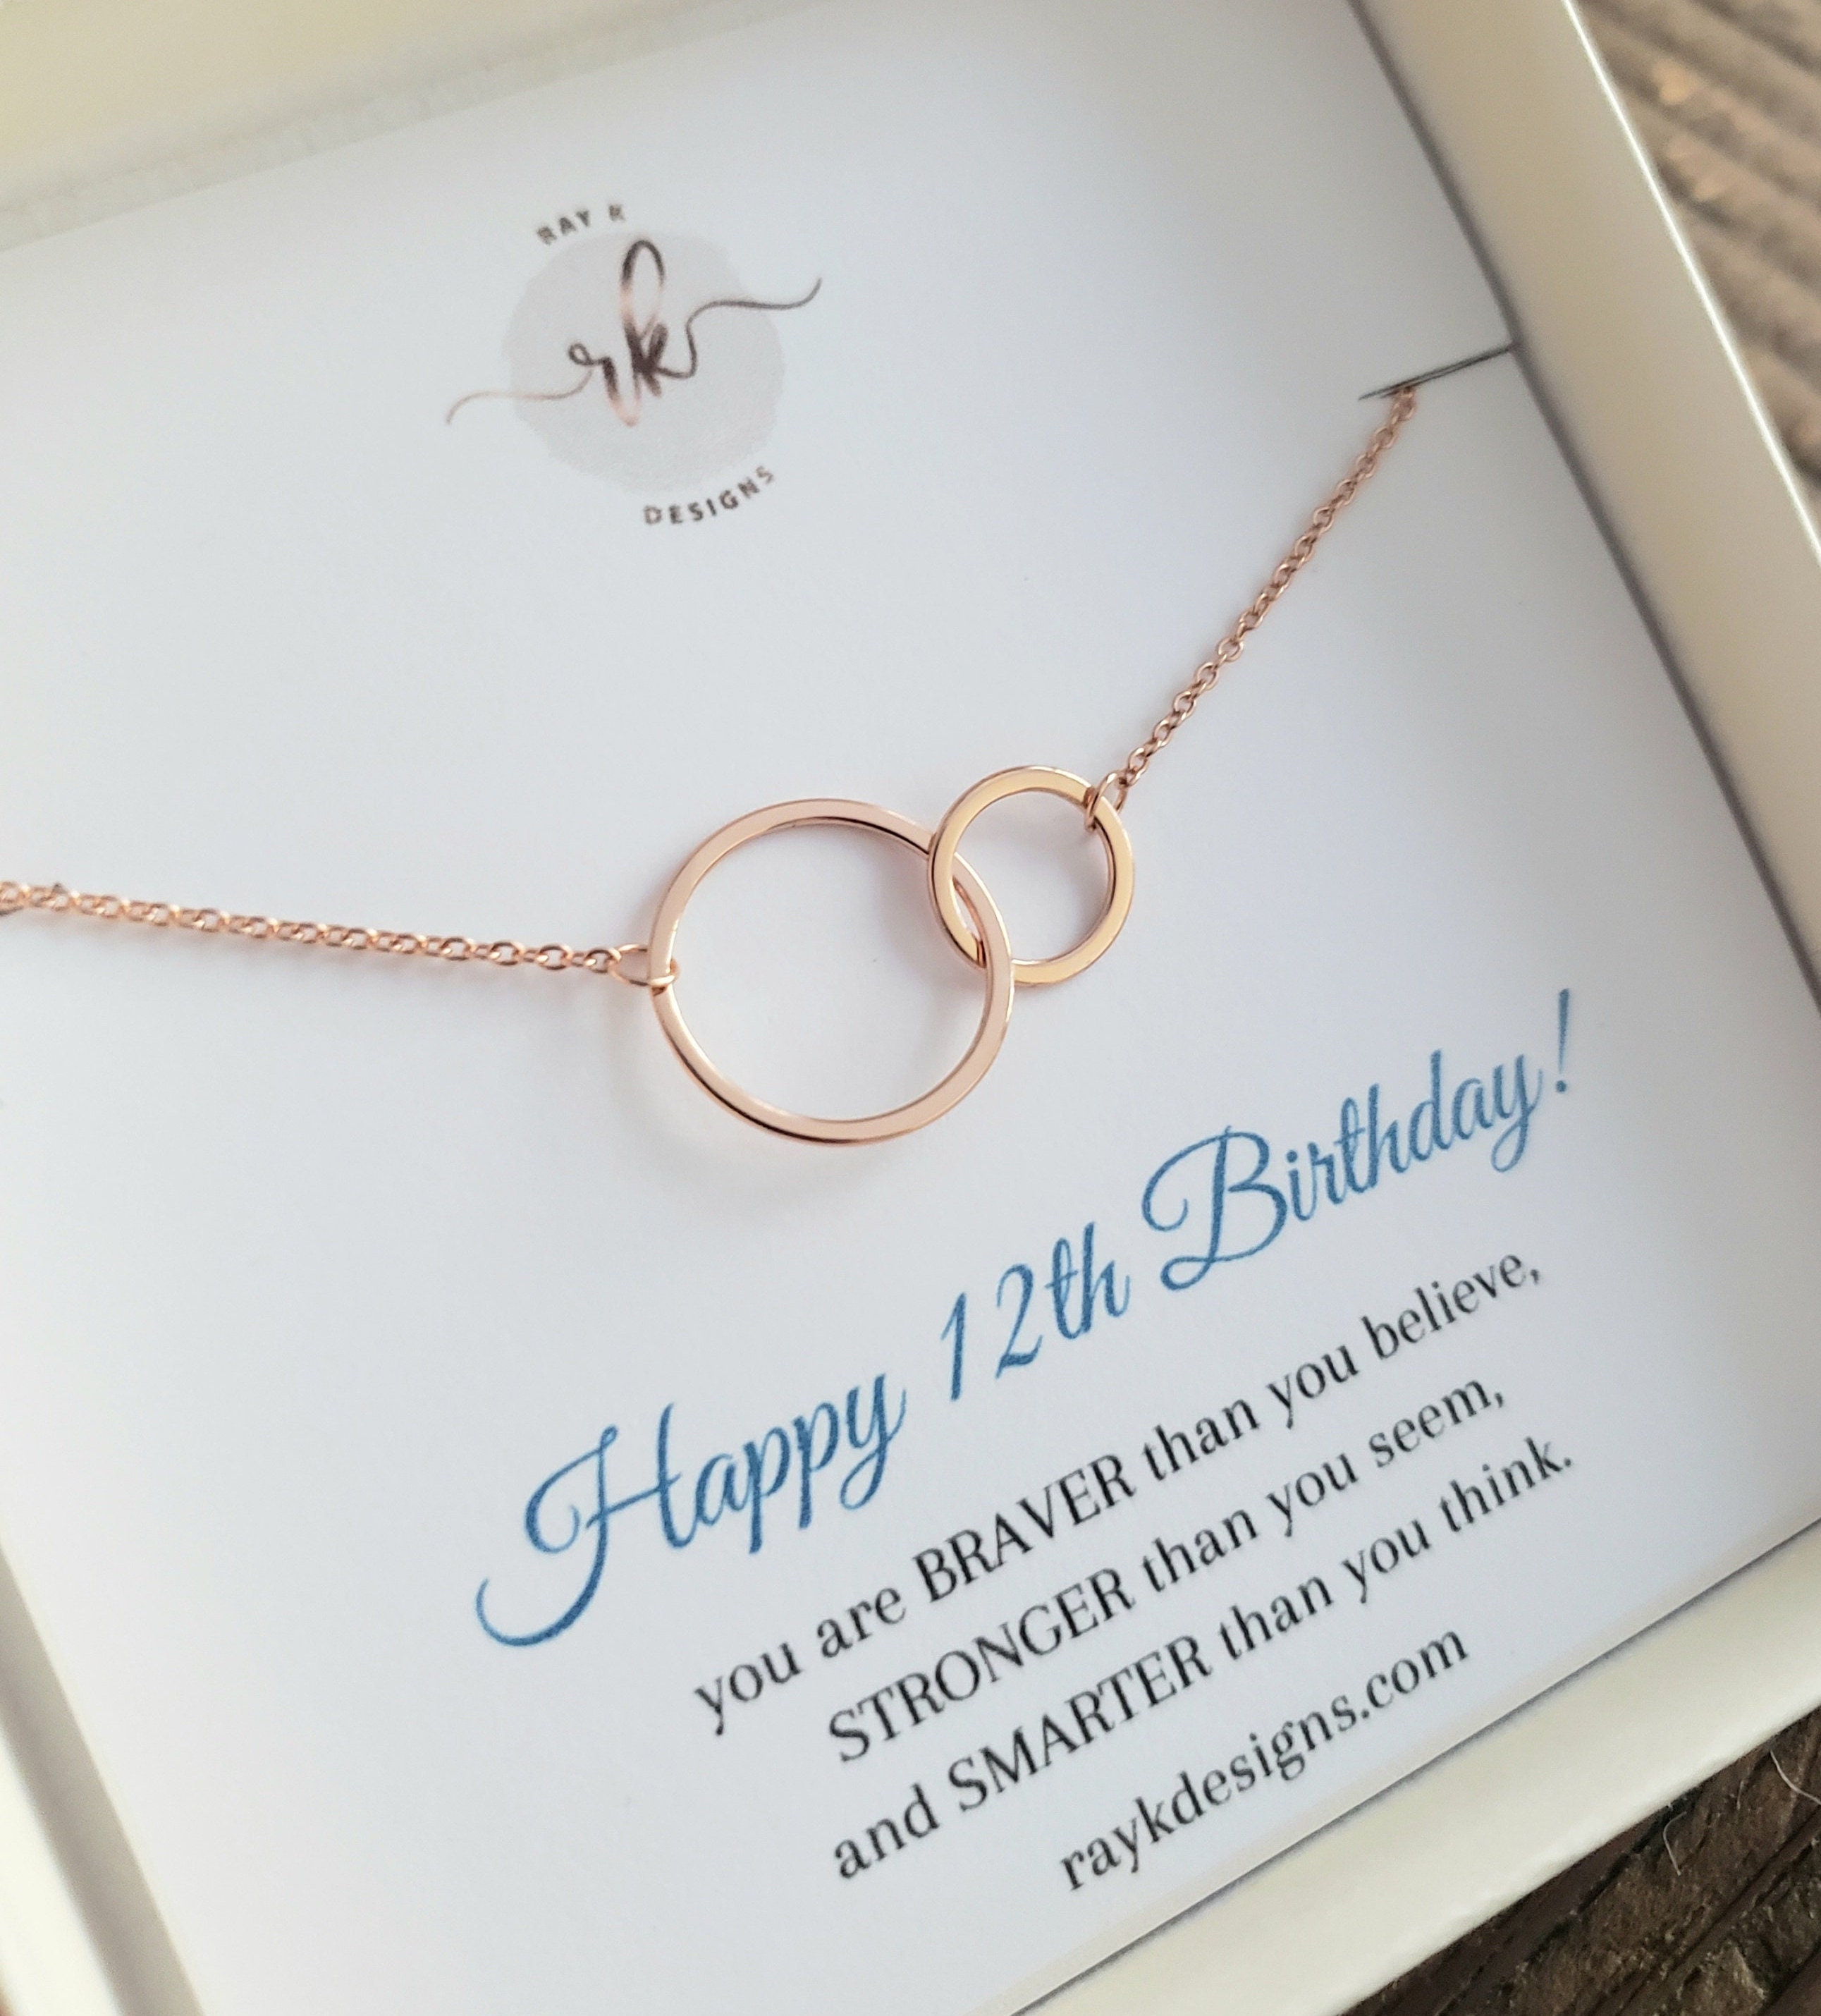 Personalized Custom 12th Birthday Gifts 12th Birthday Twelfth